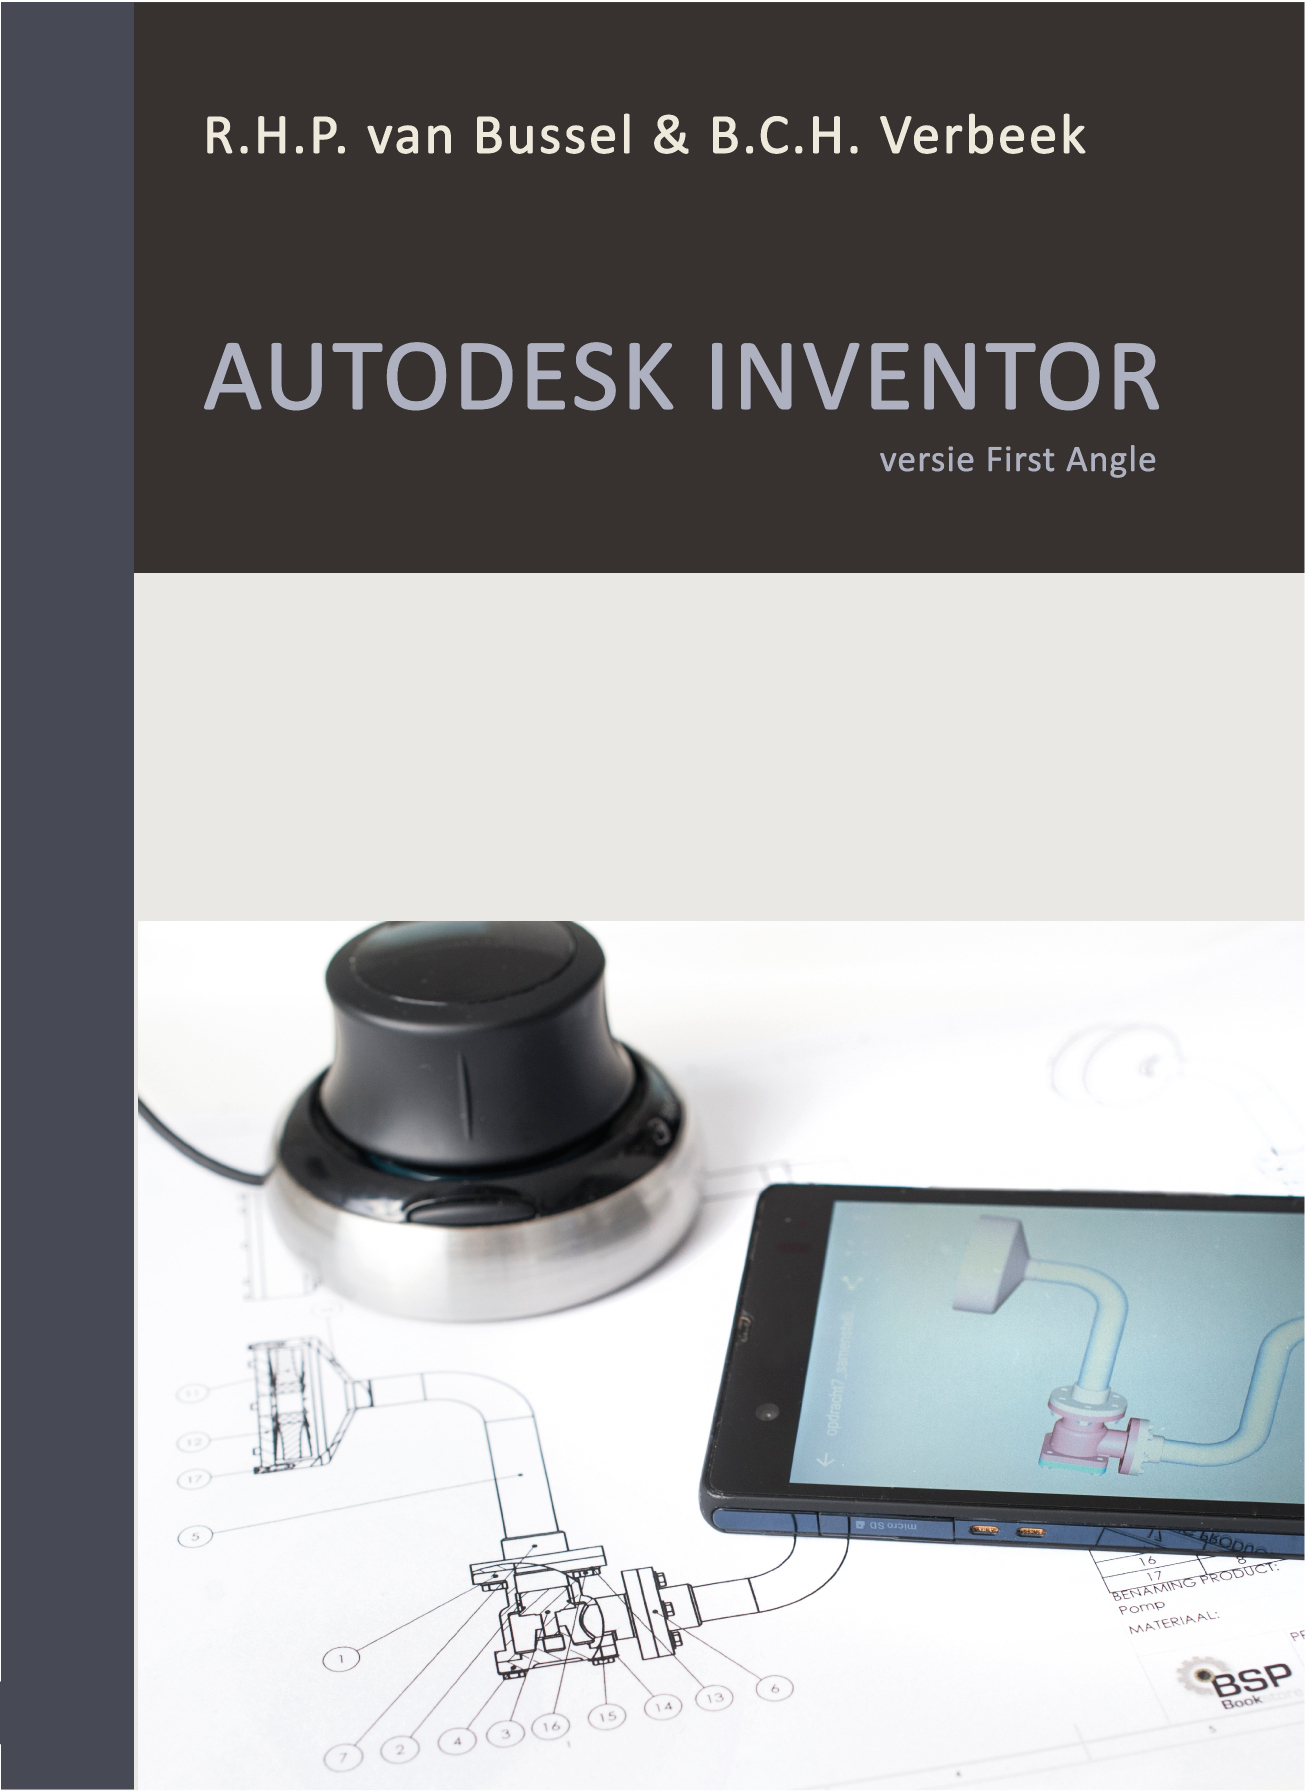 Autodesk Inventor gevorderd's thumbnail image